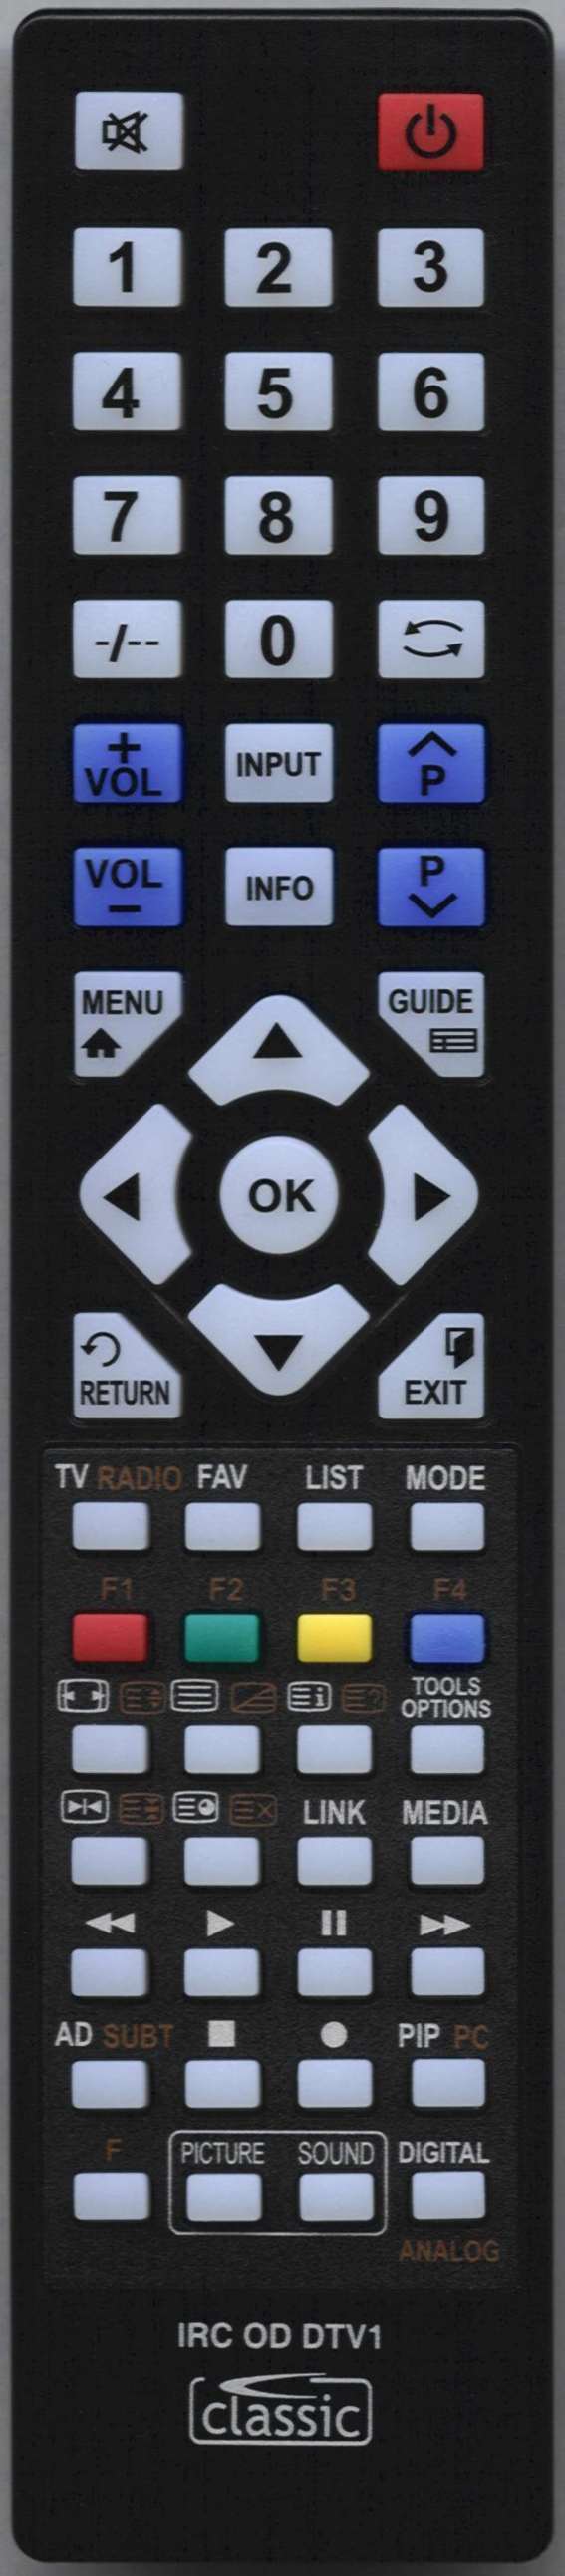 LG 65UP70006 Remote Control Alternative